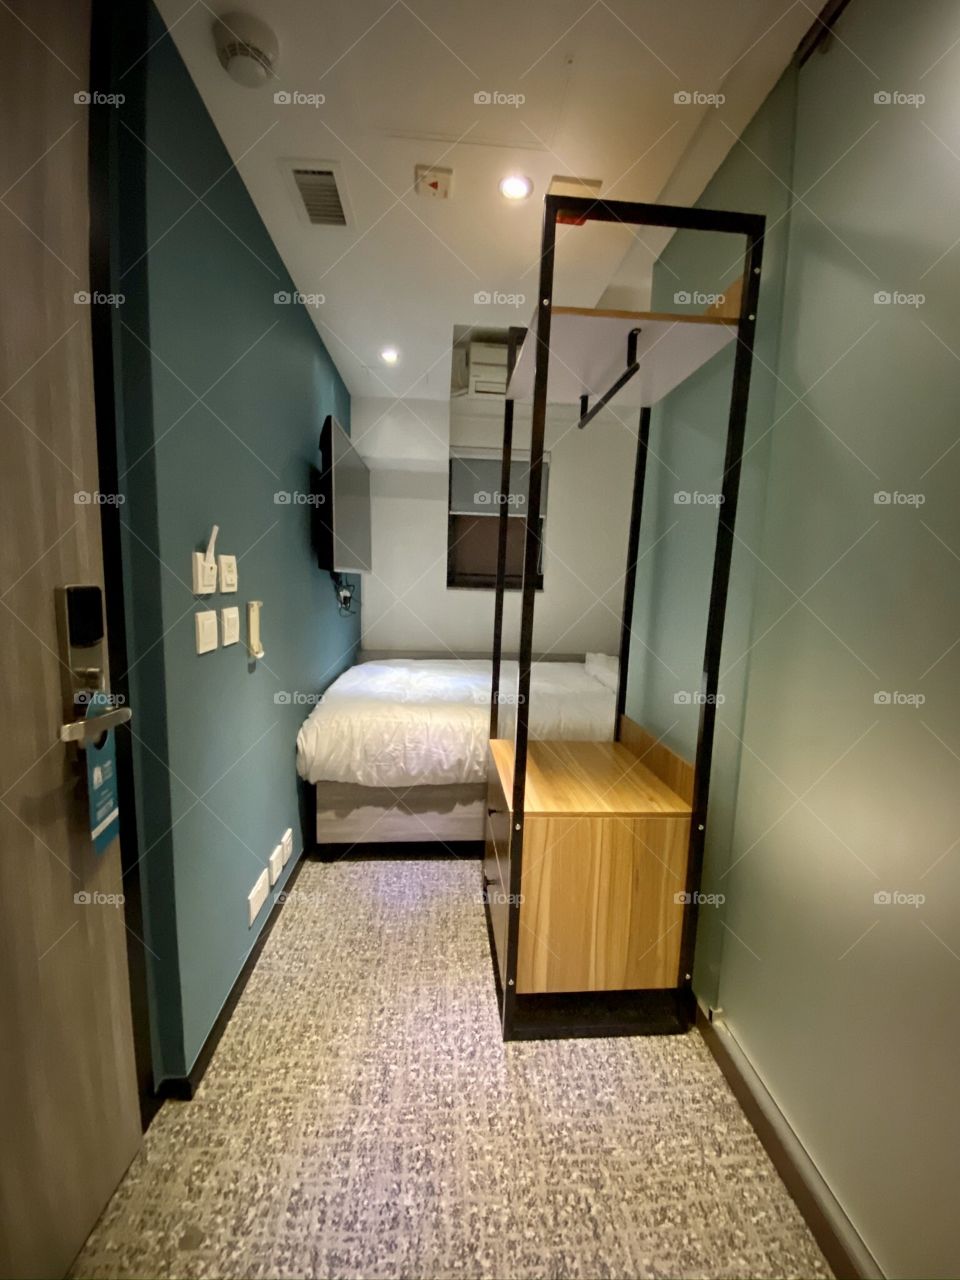 Hong Kong room design